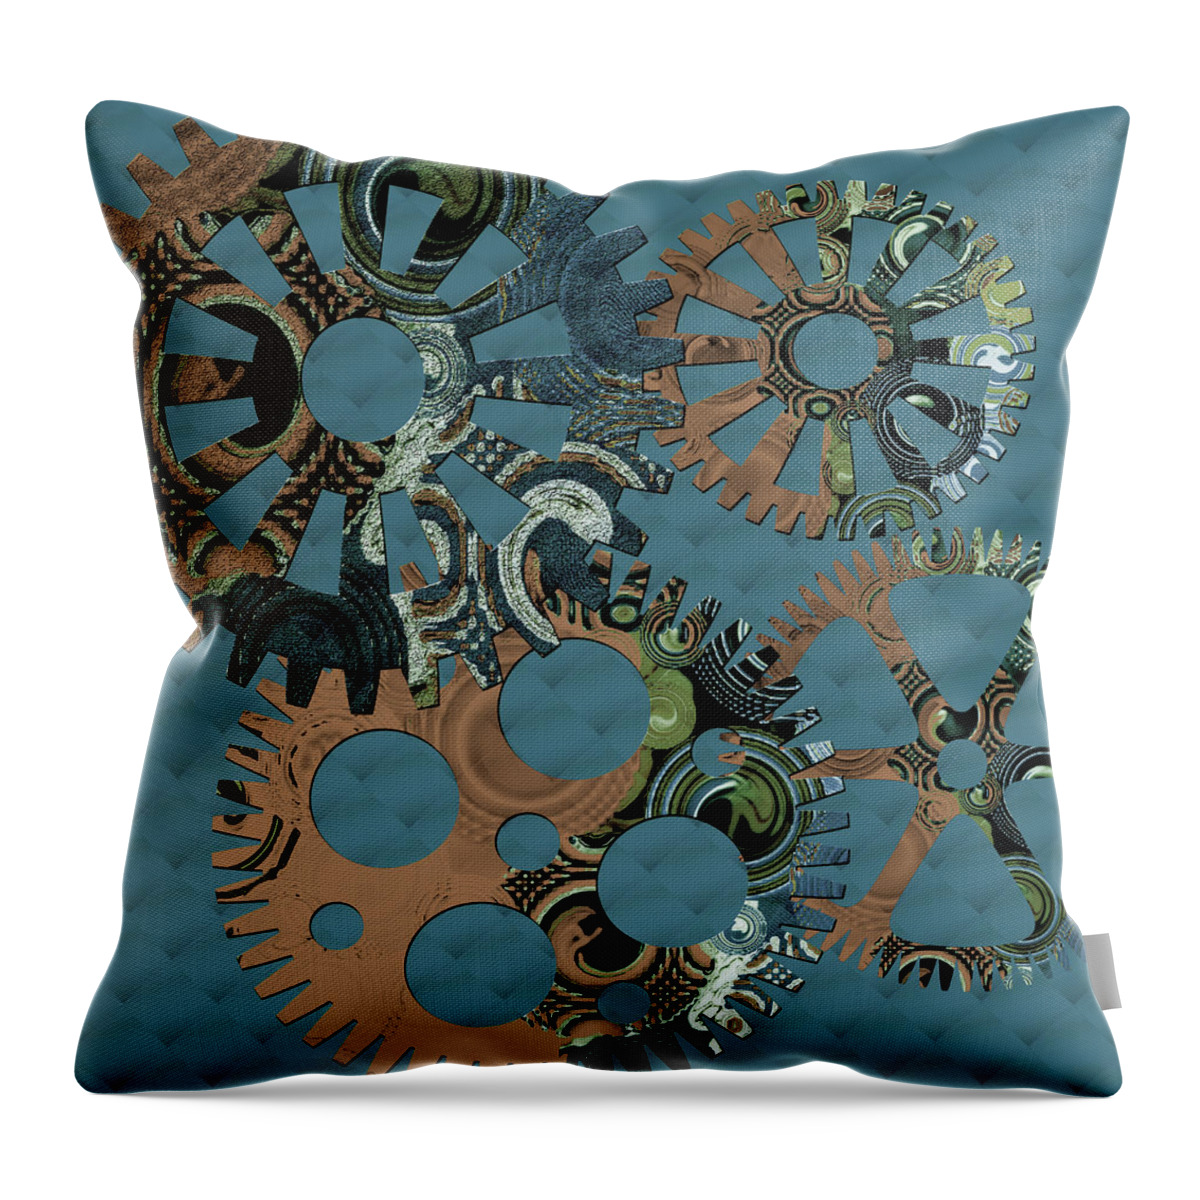 Digital Art Throw Pillow featuring the digital art Wheels by Bonnie Bruno